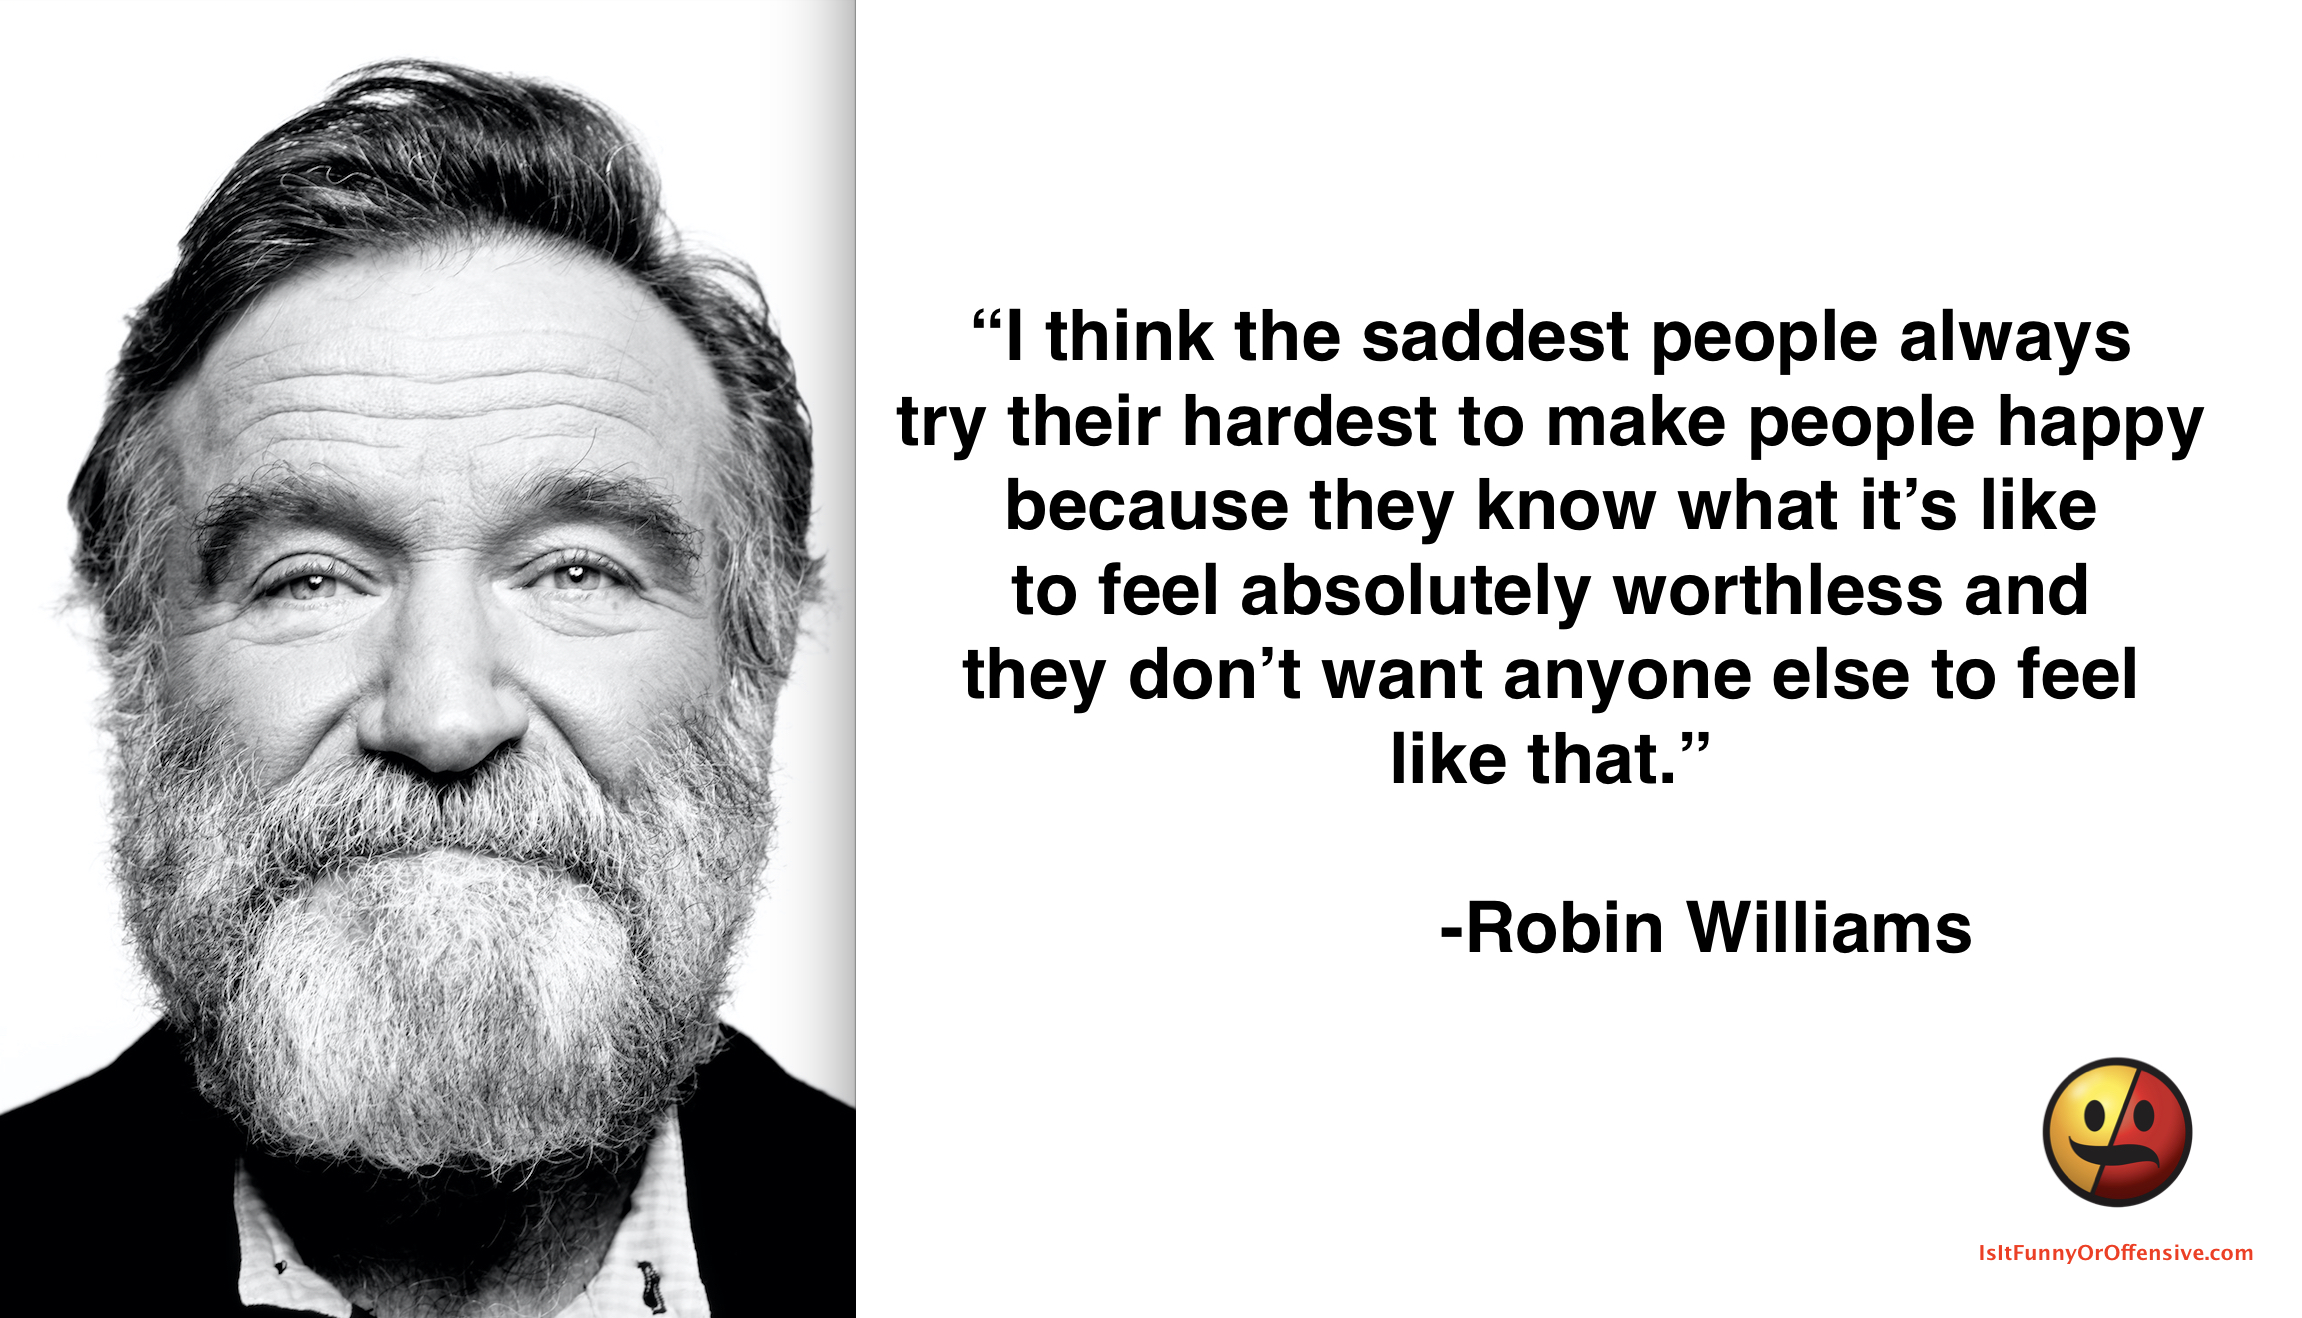 Robin Williams on Depression